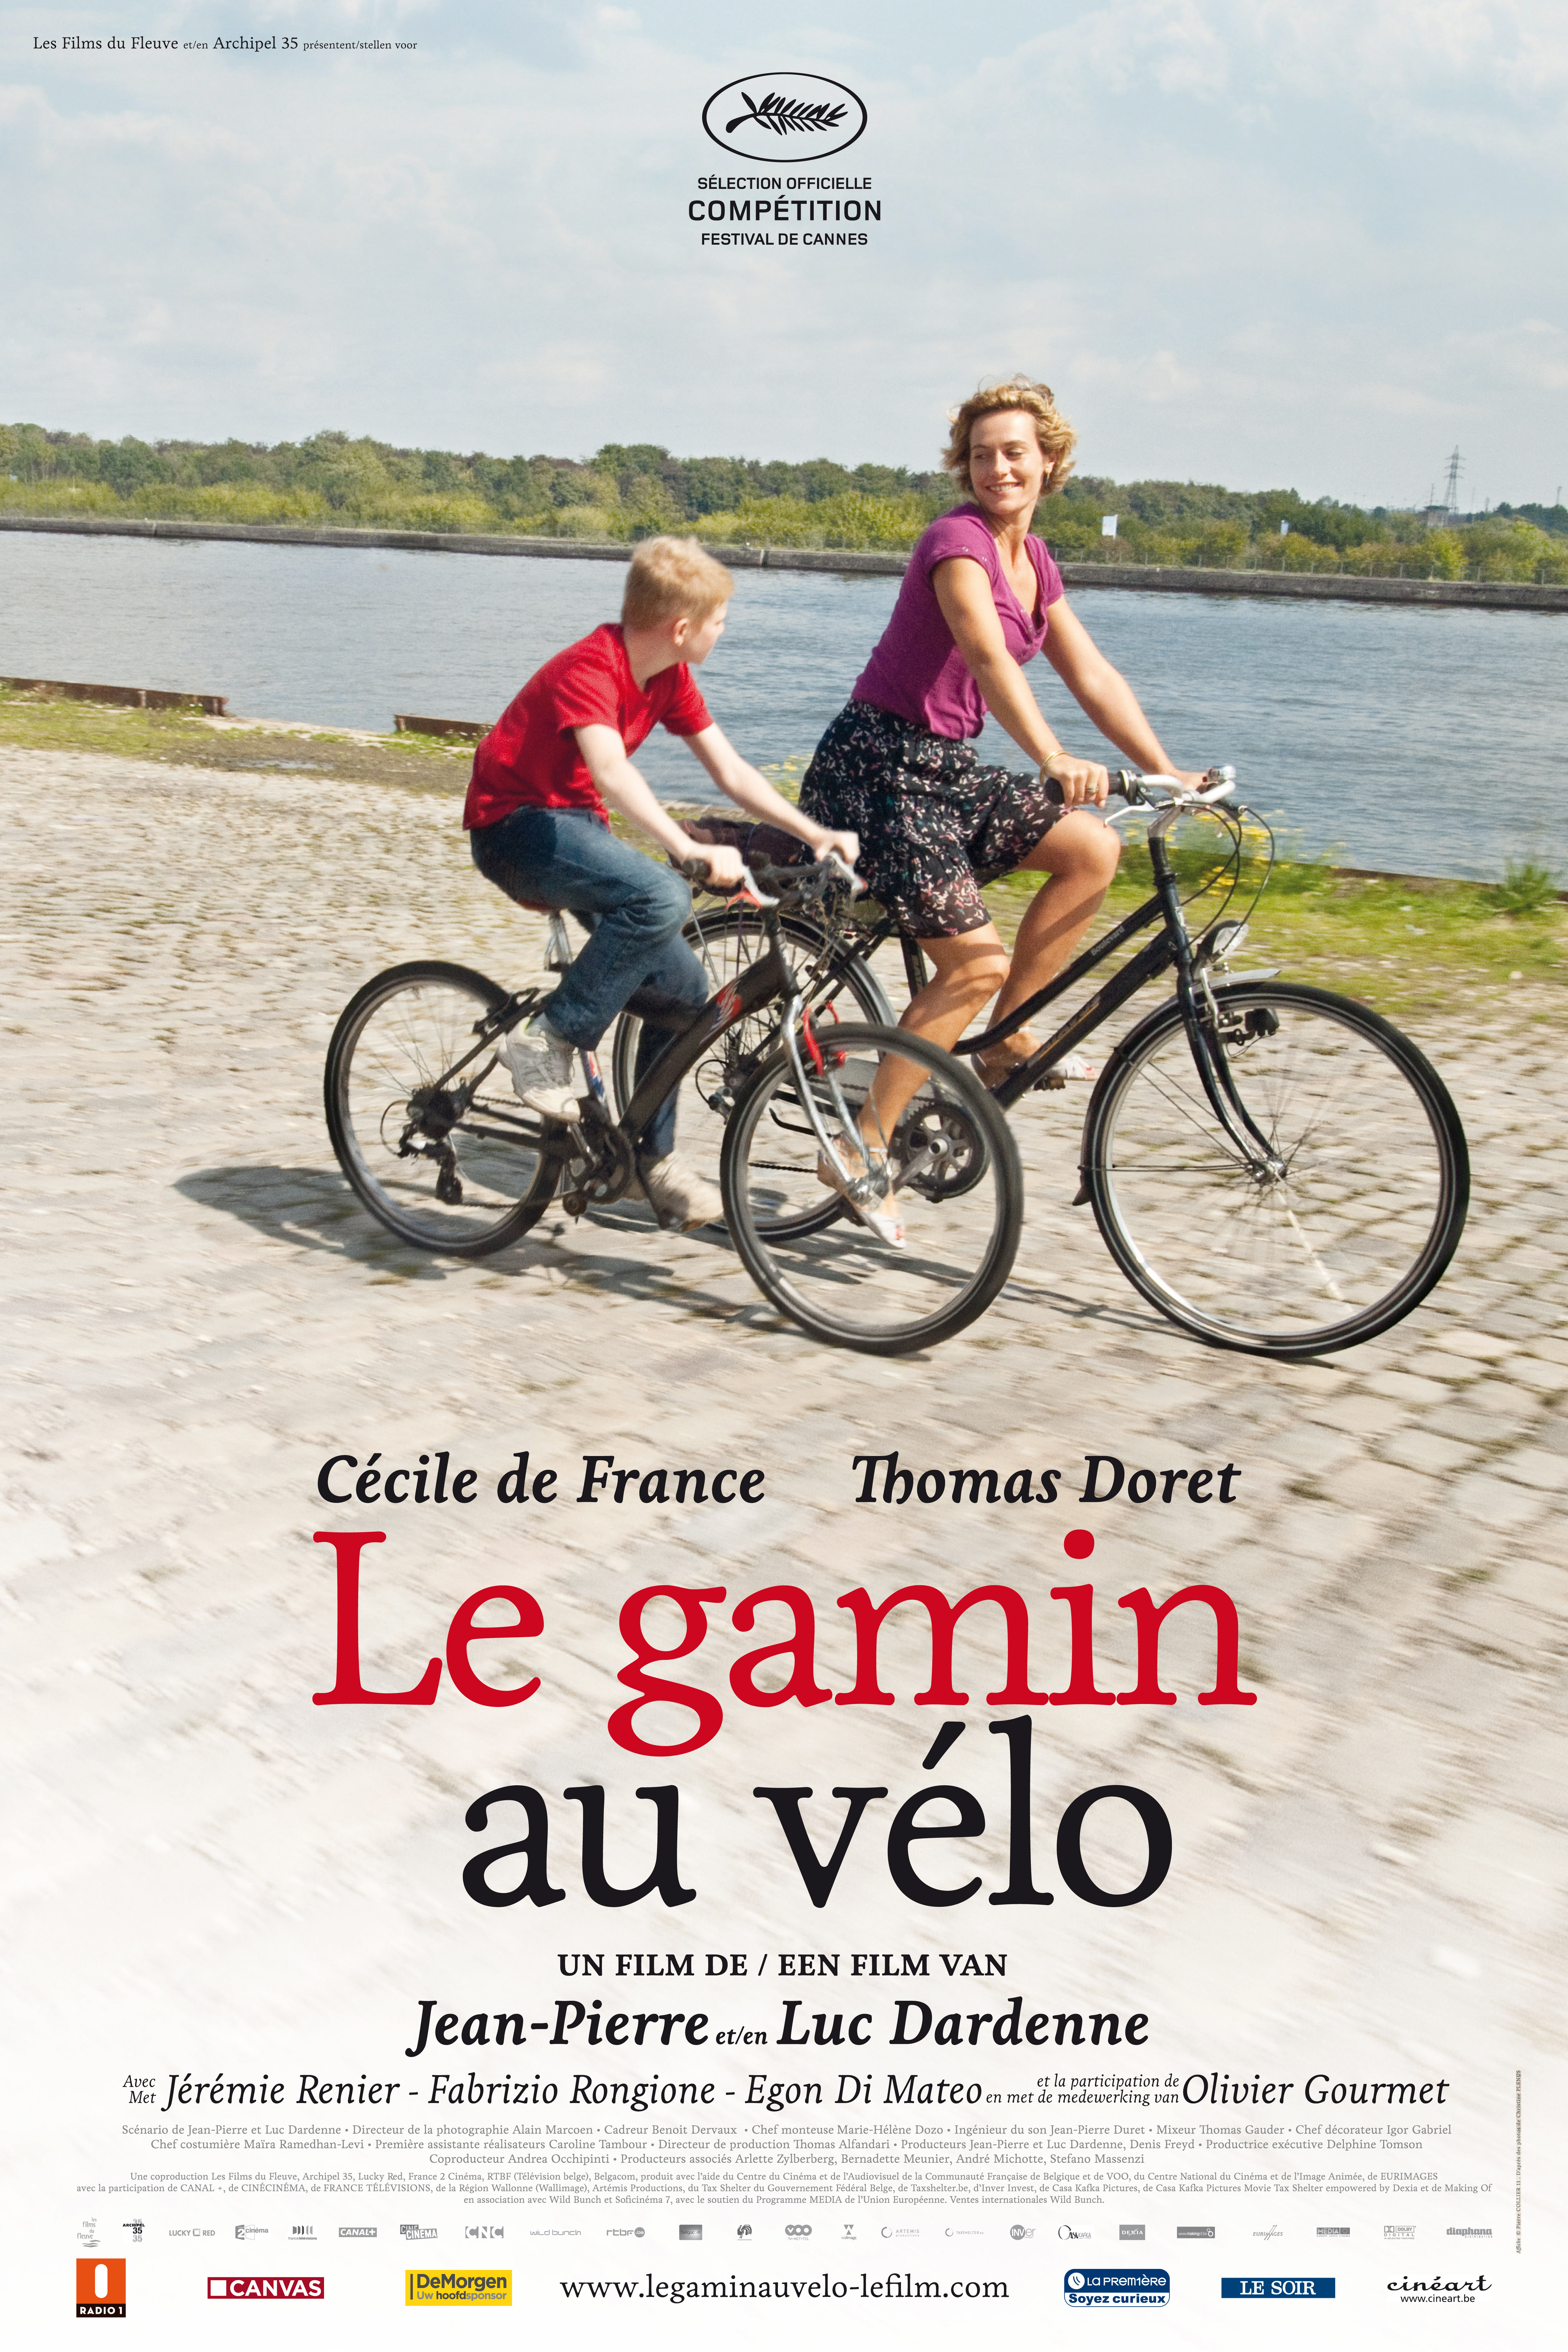 Le Gamin au vélo (Jean-Pierre & Luc Dardenne, 2011)